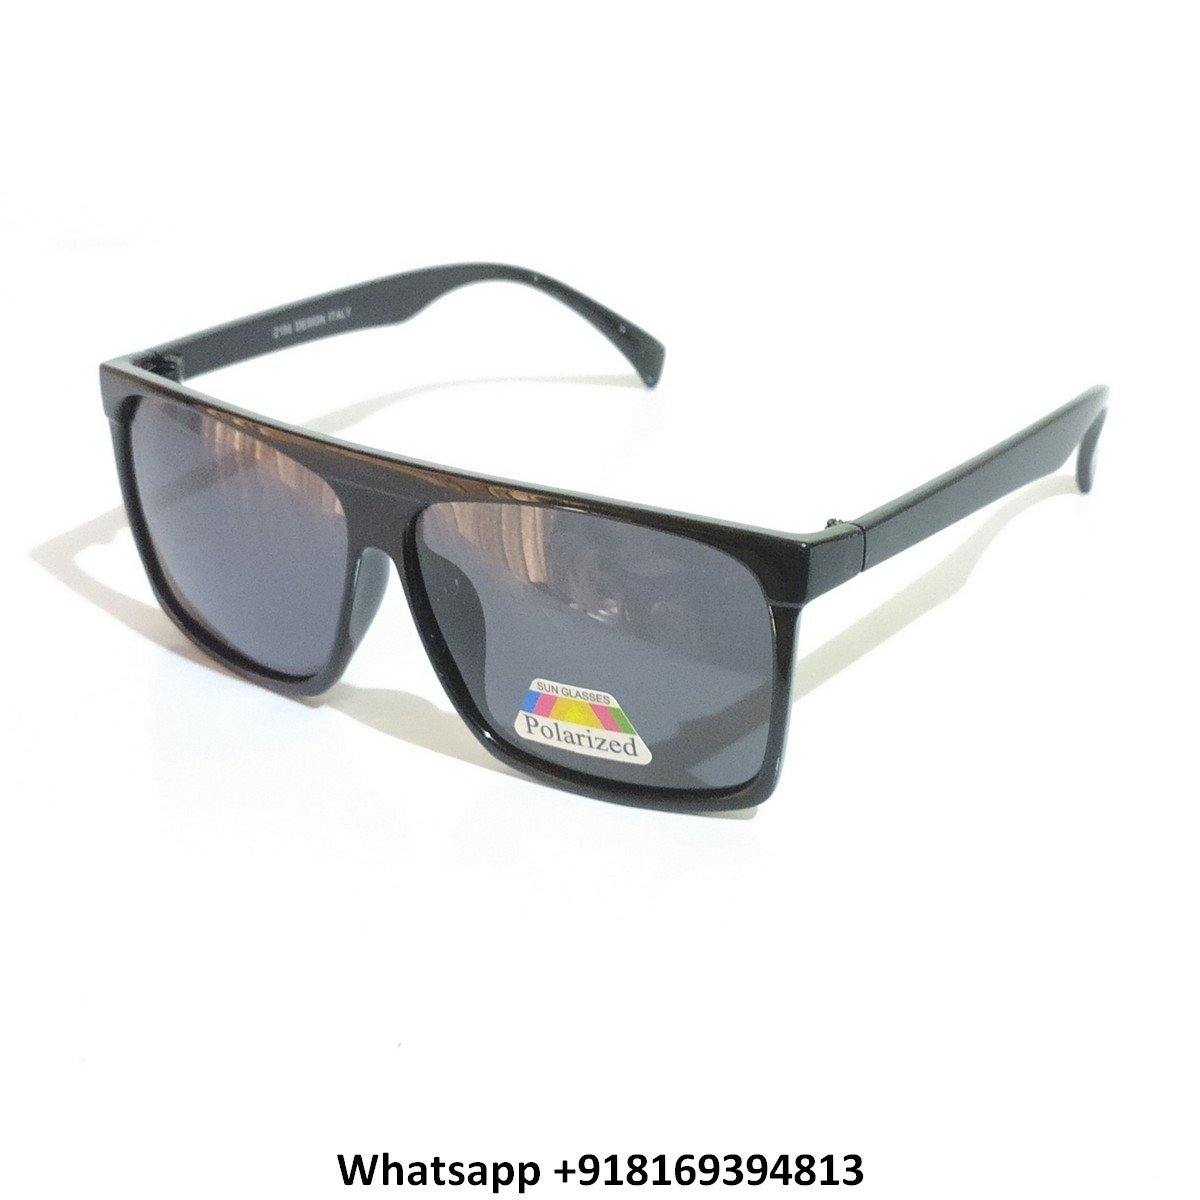 Trendy Square Polarized Sunglasses for Men and Women 2156BK - Glasses India Online